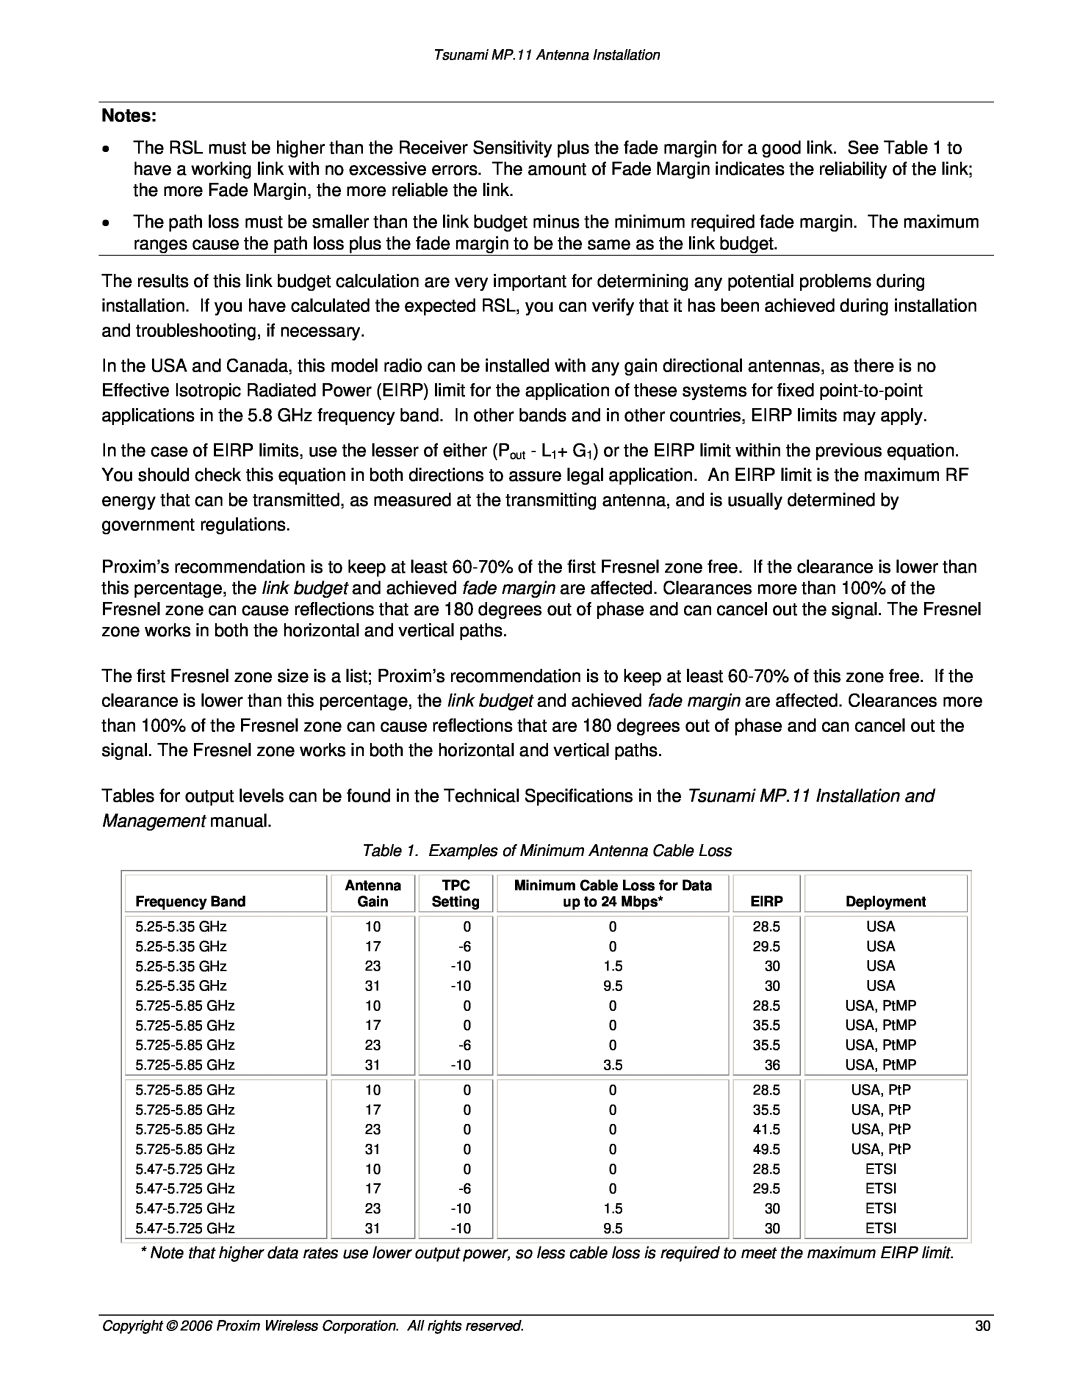 Proxim Tsunami MP.11 Management manual, Examples of Minimum Antenna Cable Loss 